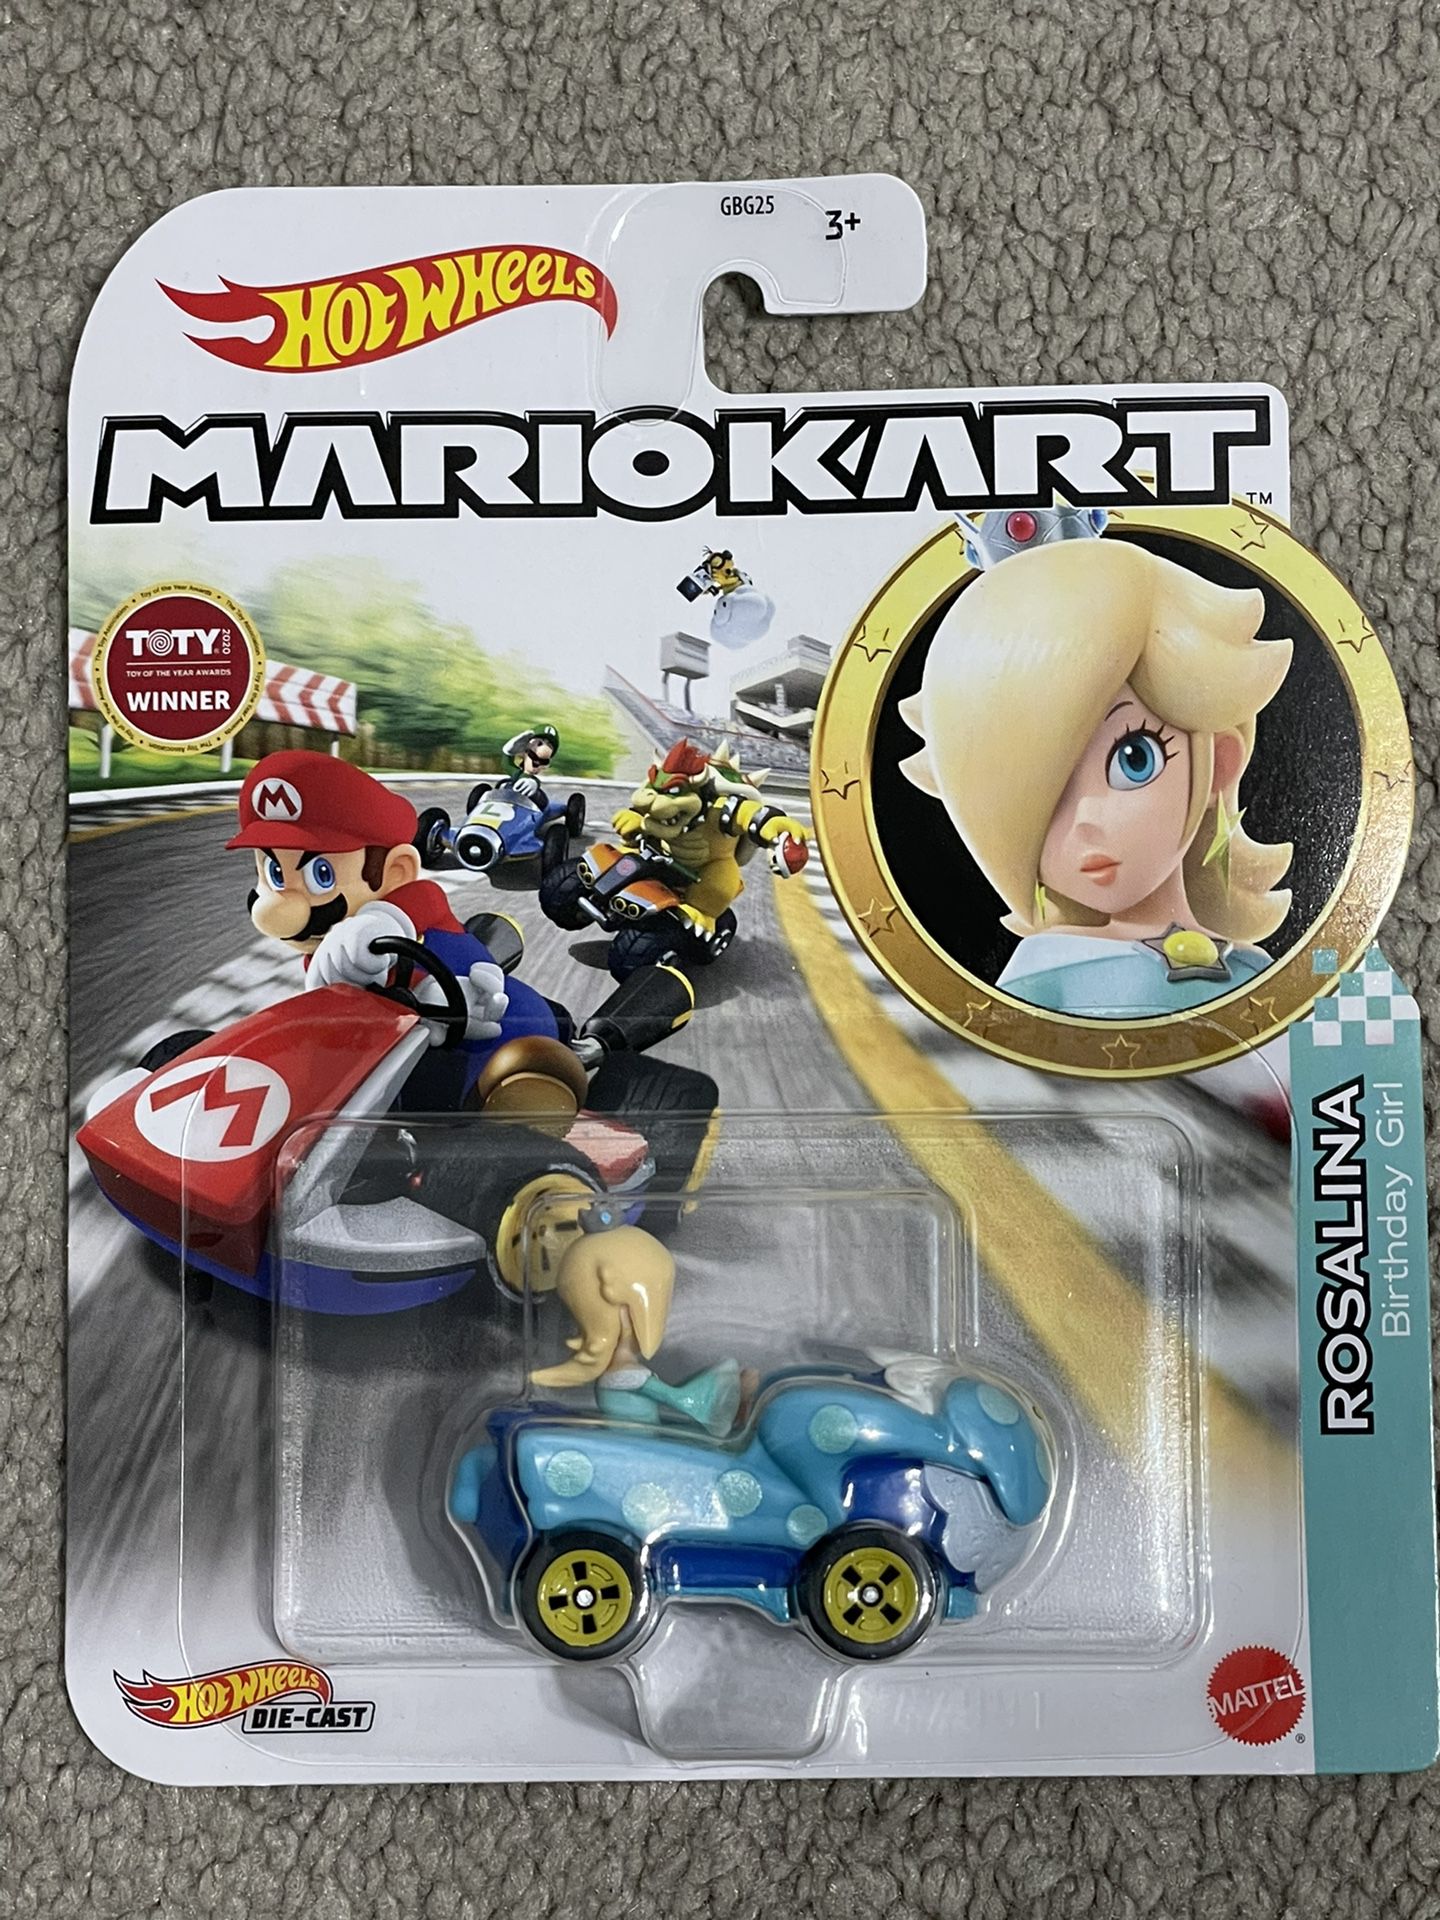 Mattel - Hot Wheels Mario Kart, Rosalina